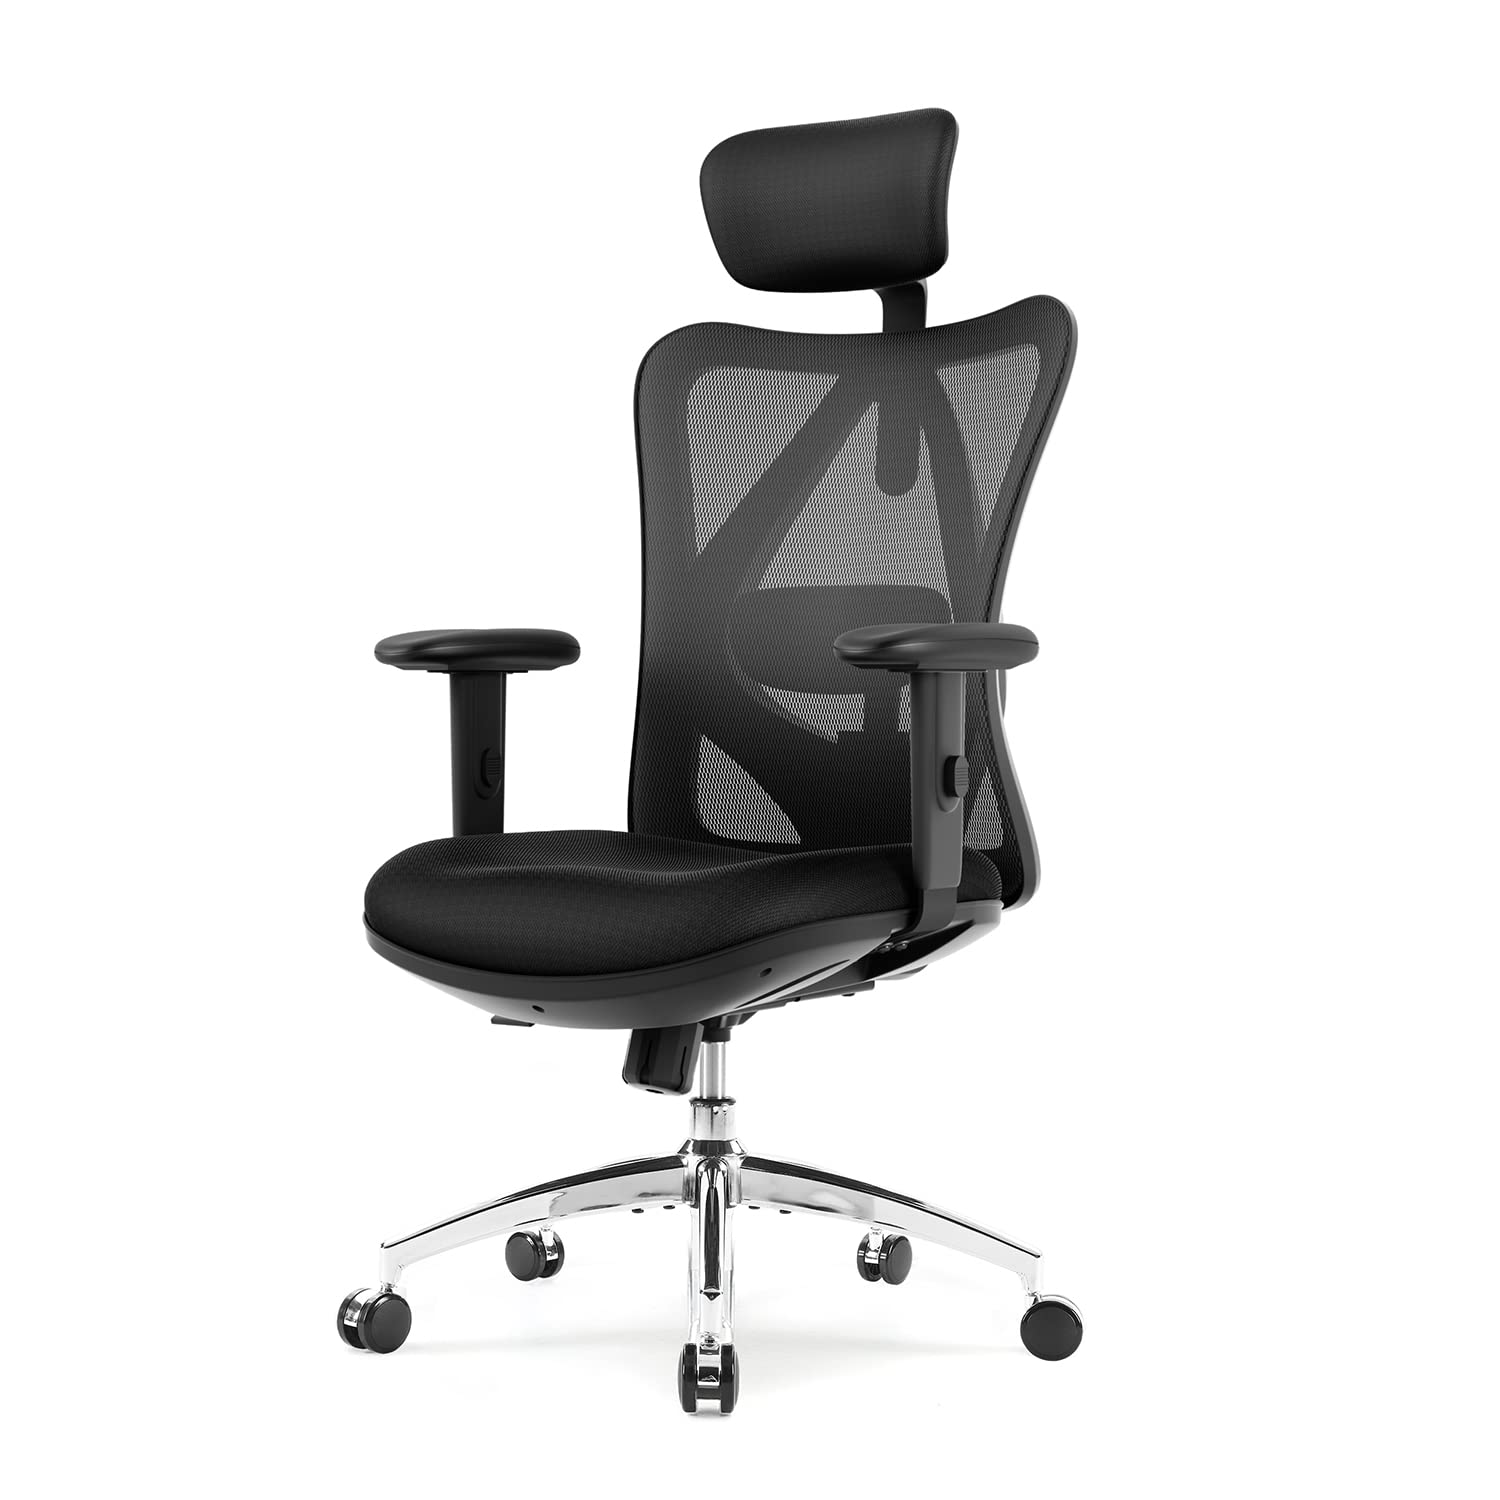 SIHOO Ergonomic Office Chair high Back Chair………